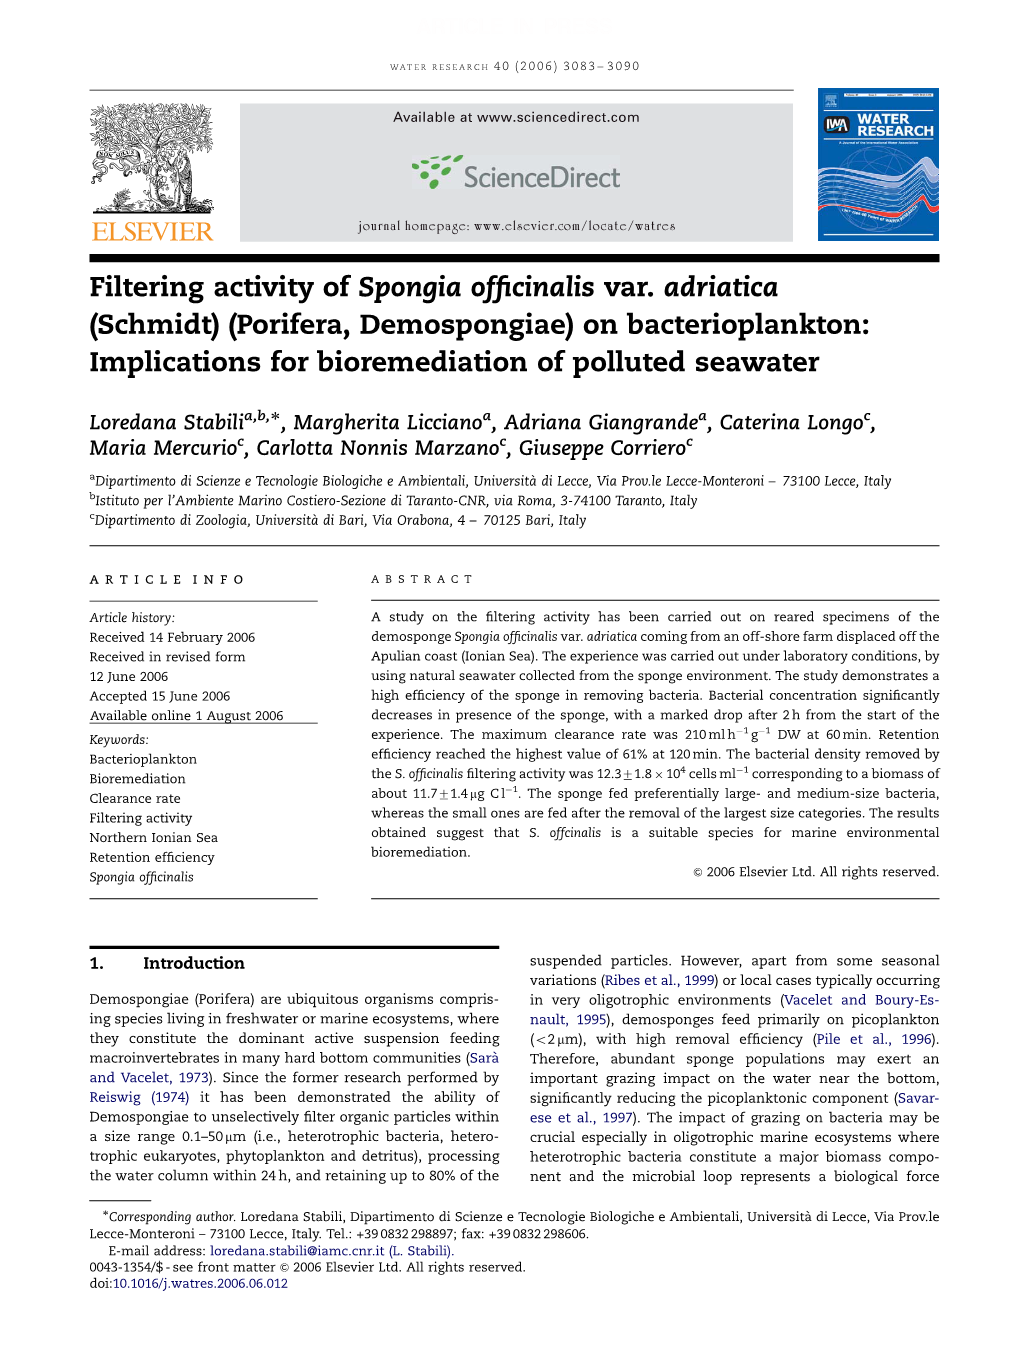 Filtering Activity of Spongia Officinalis Var. Adriatica (Schmidt) (Porifera, Demospongiae) on Bacterioplankton: Implications Fo